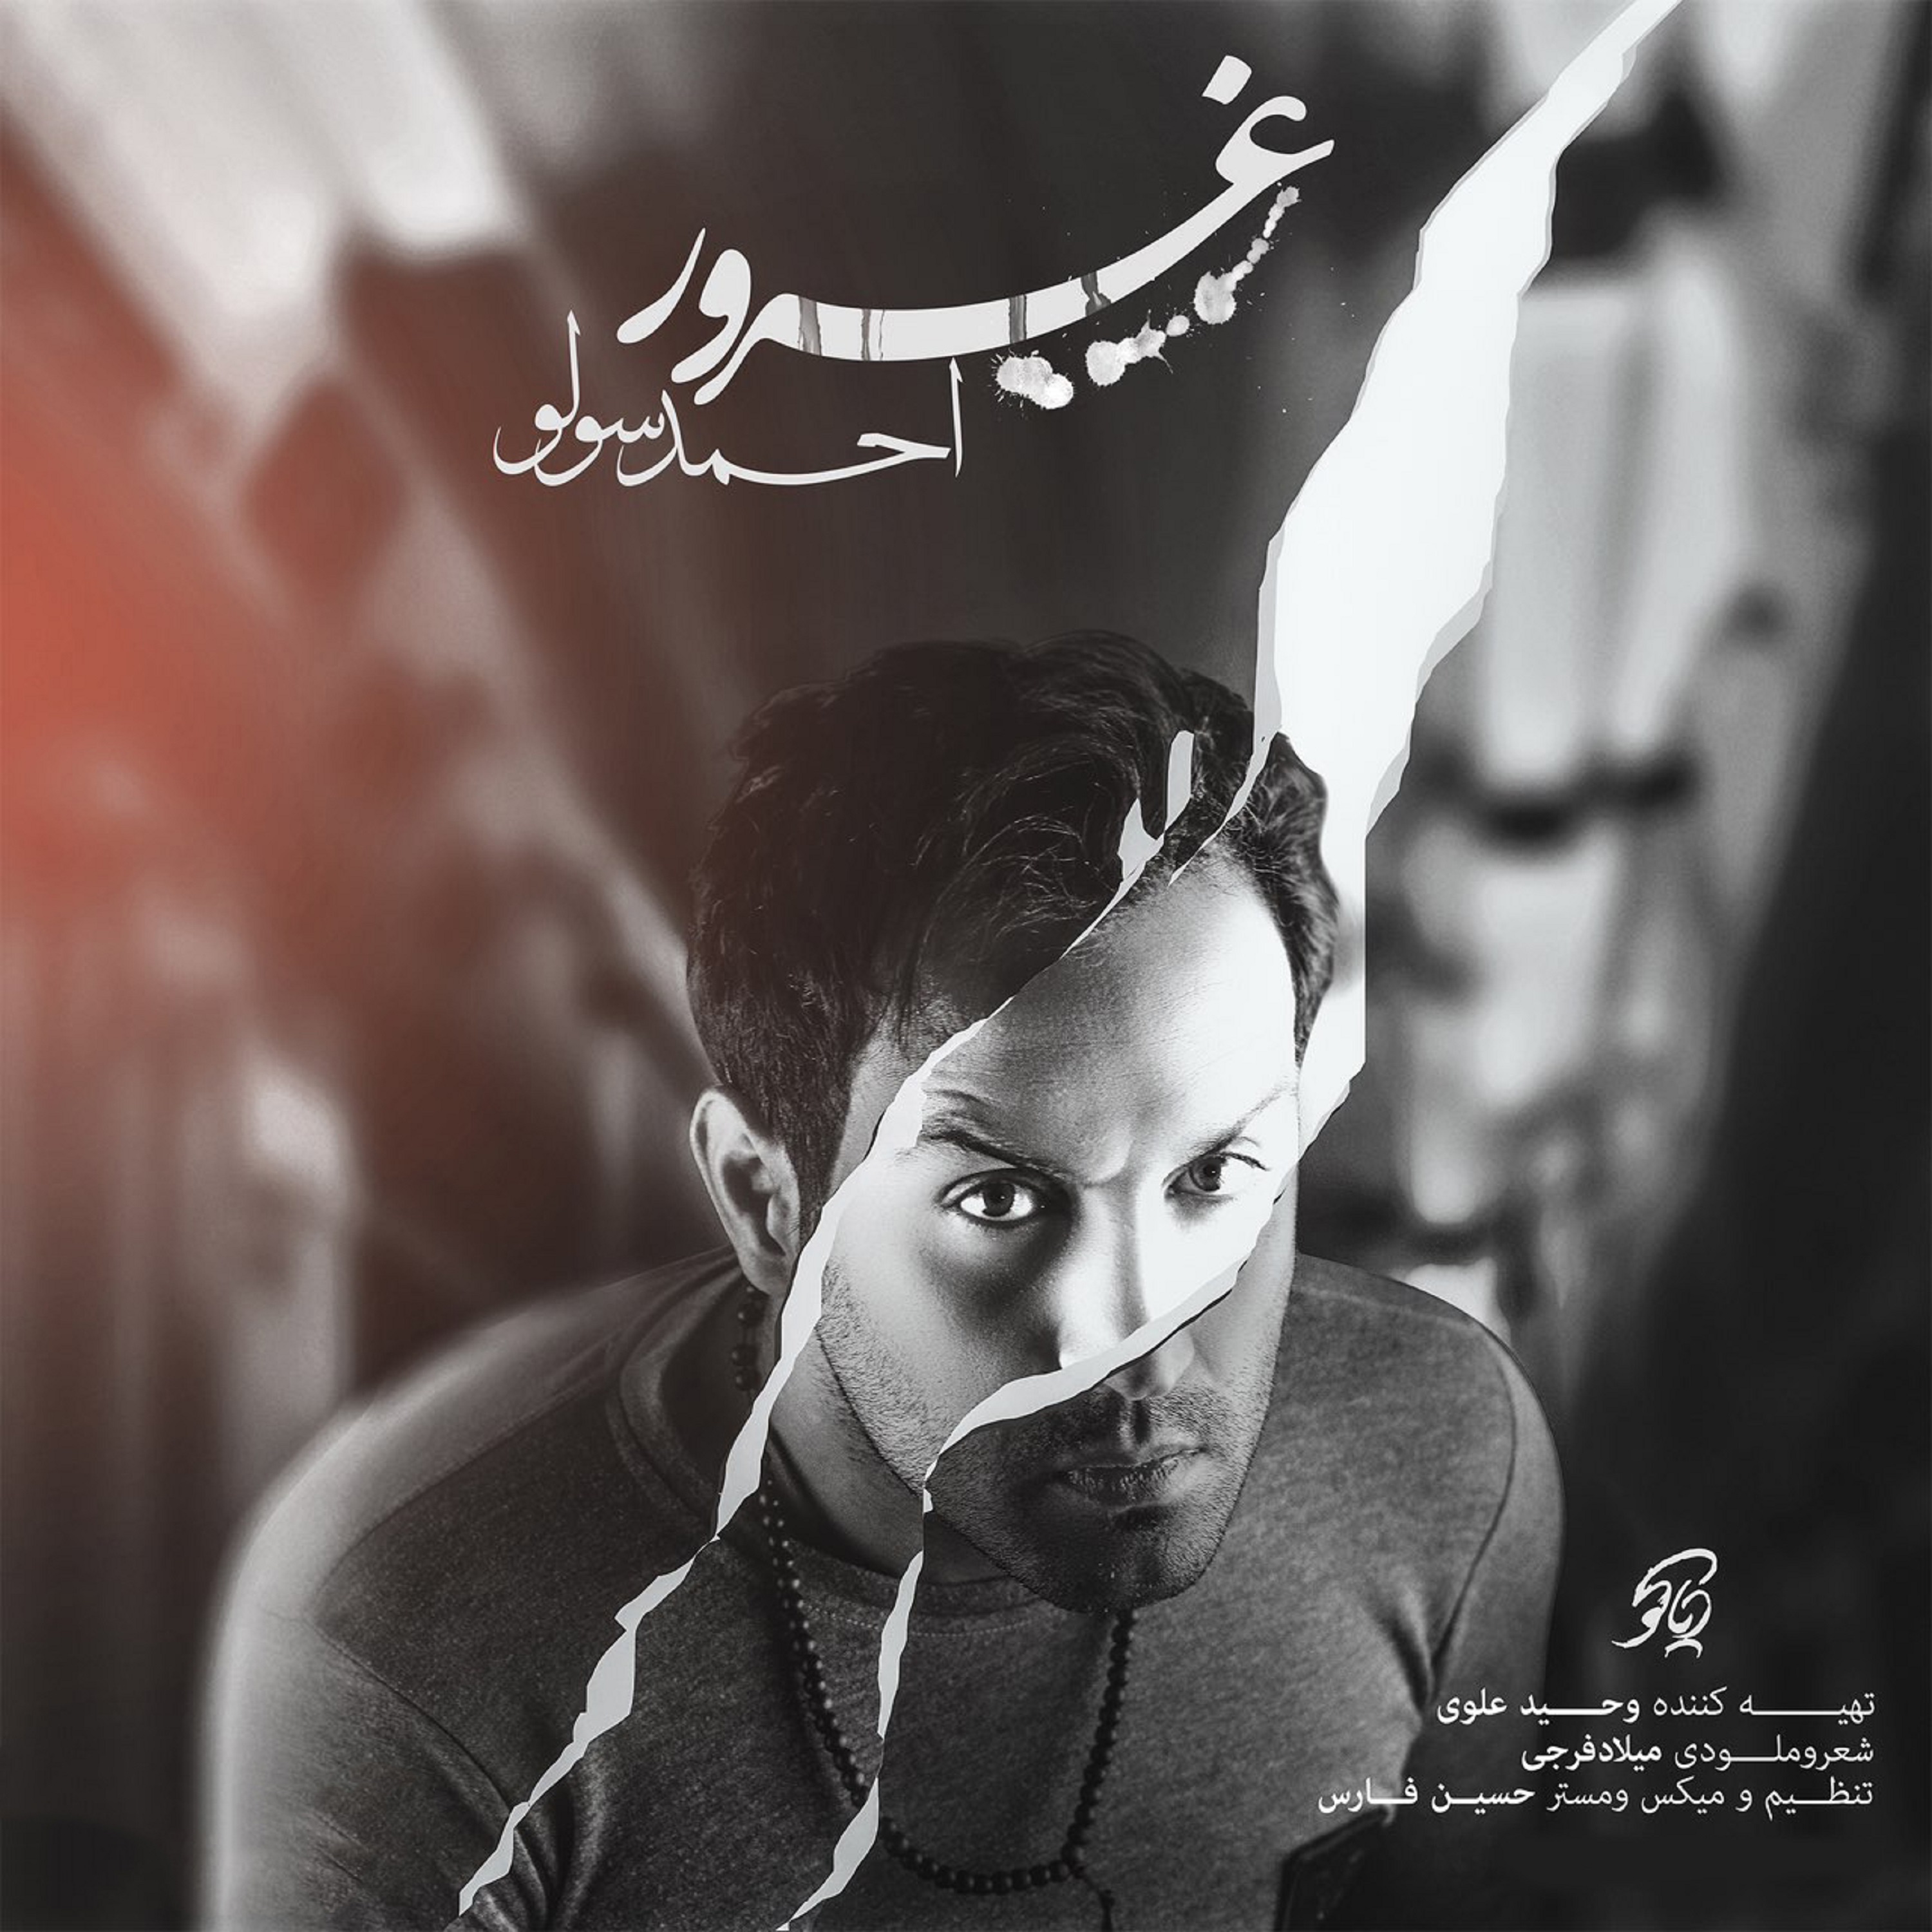  دانلود آهنگ جدید احمدرضا شهریاری - غرور | Download New Music By Ahmad Solo - Ghoroor